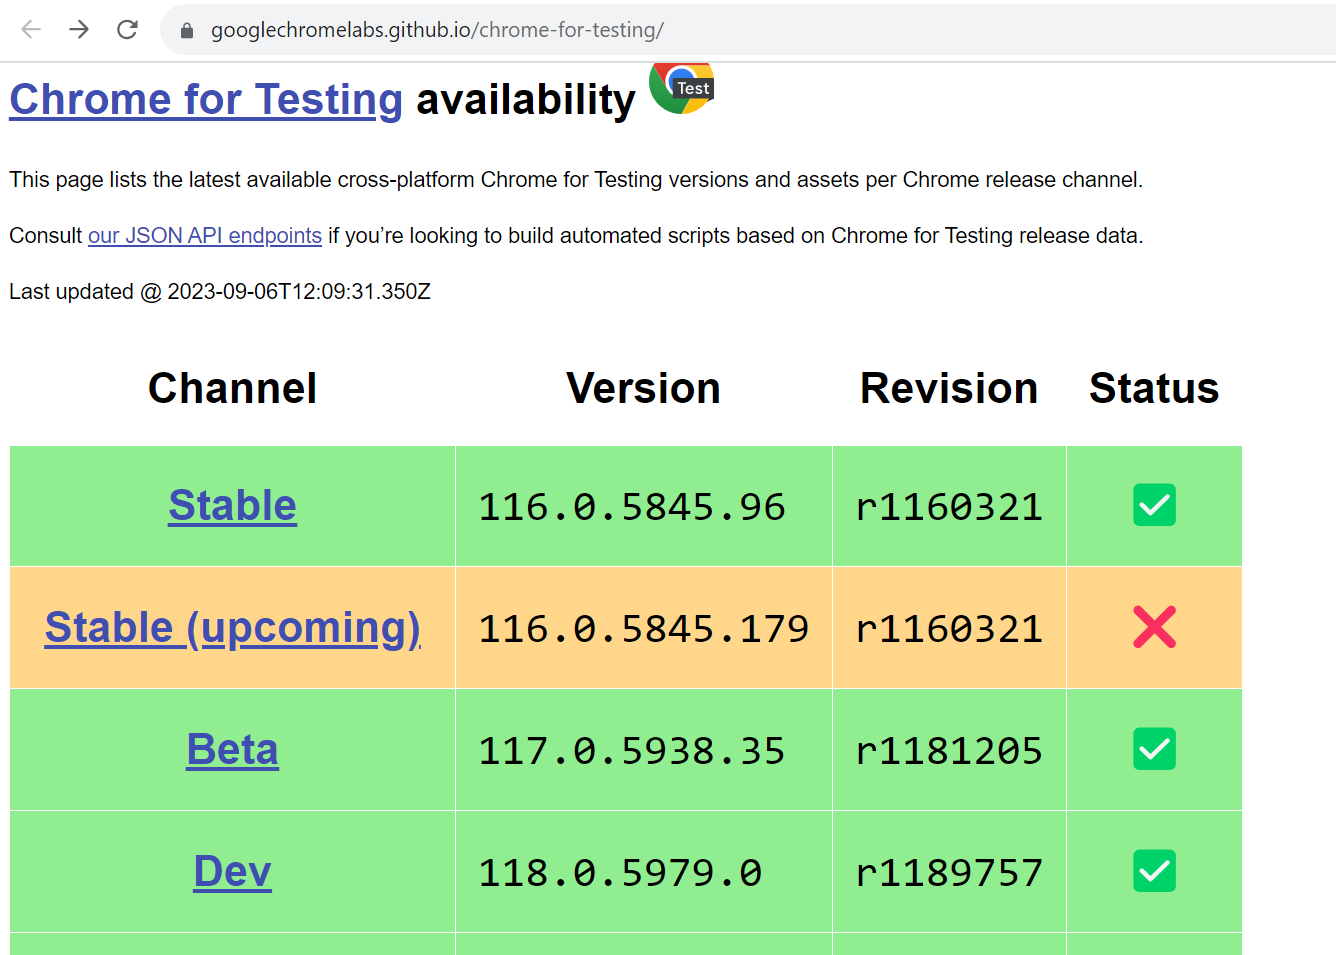 Chrome for Testing availability dashboard